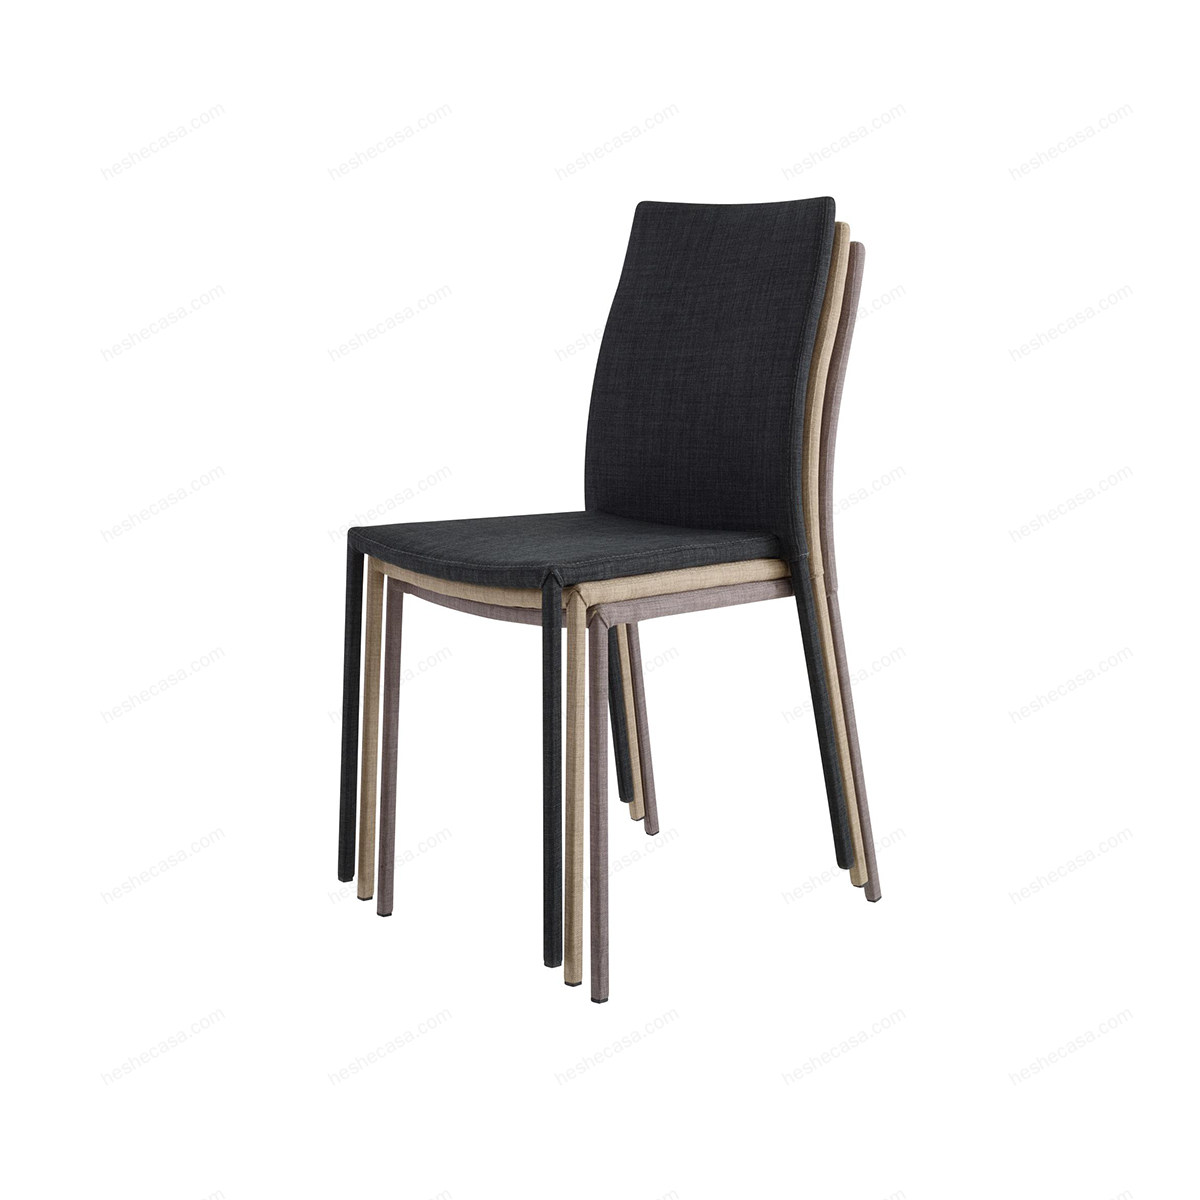 Slim-chair单椅